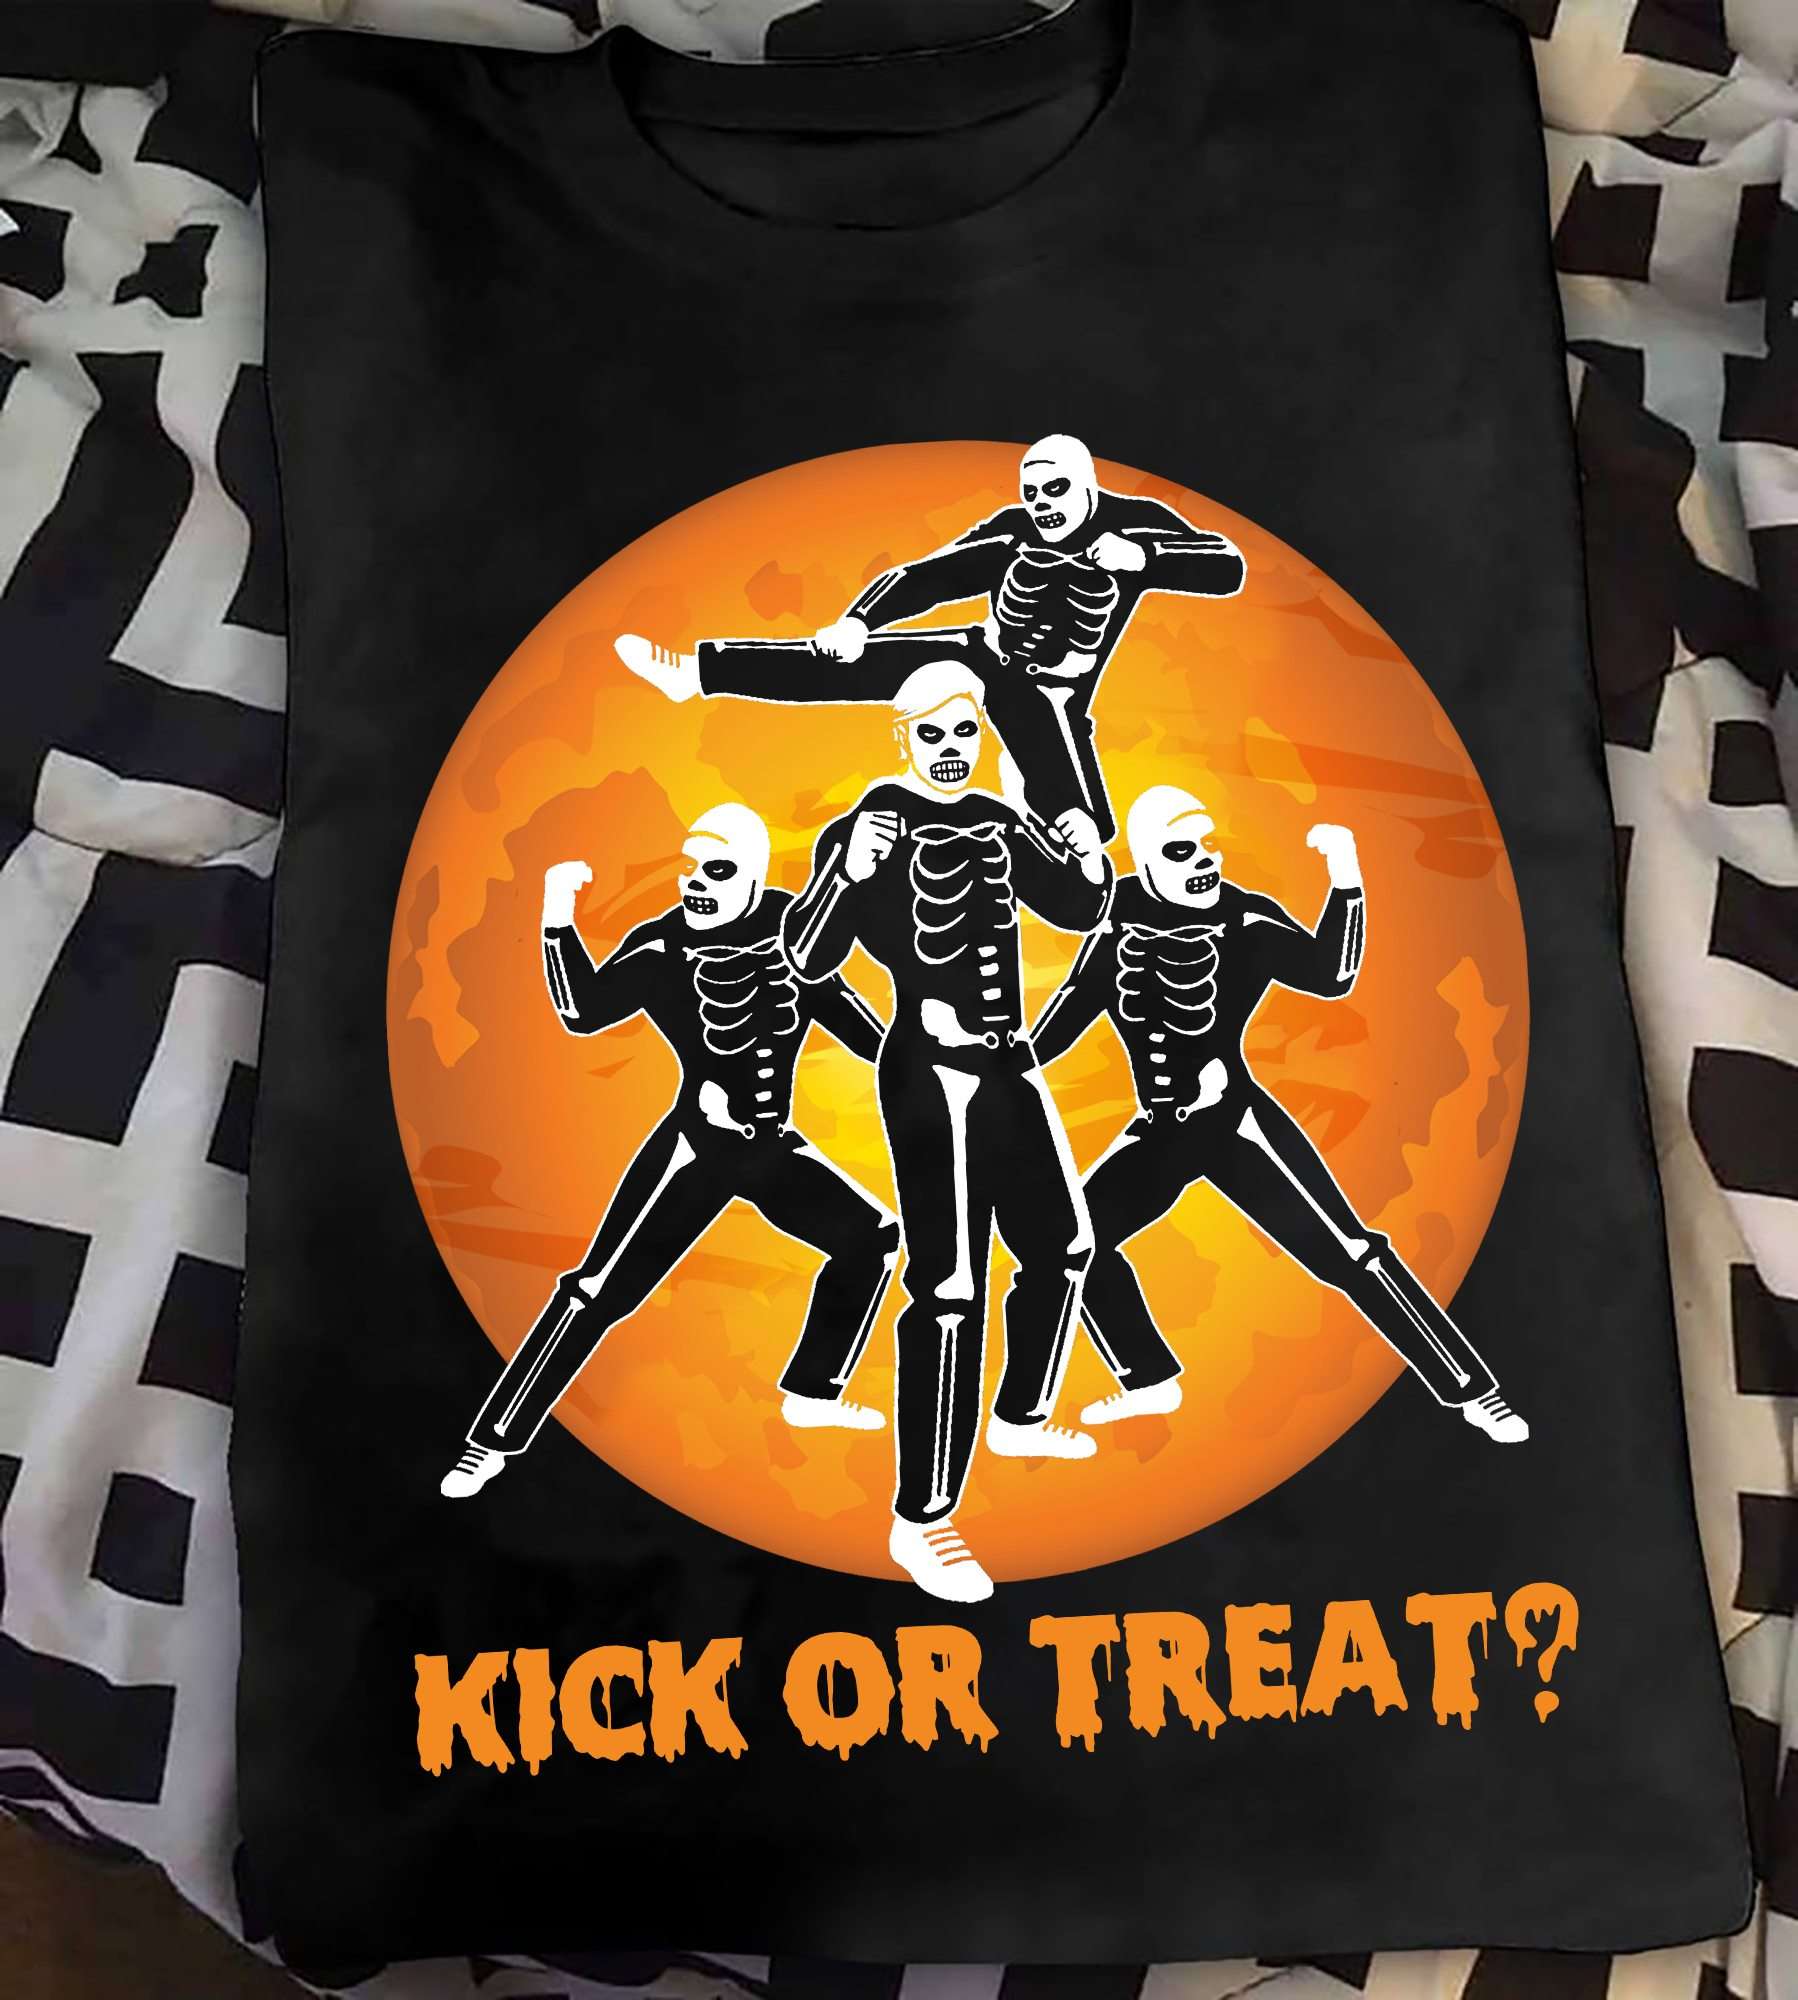 Skeletons Karate, Halloween Skeleton Costume - Kick Or Treat?